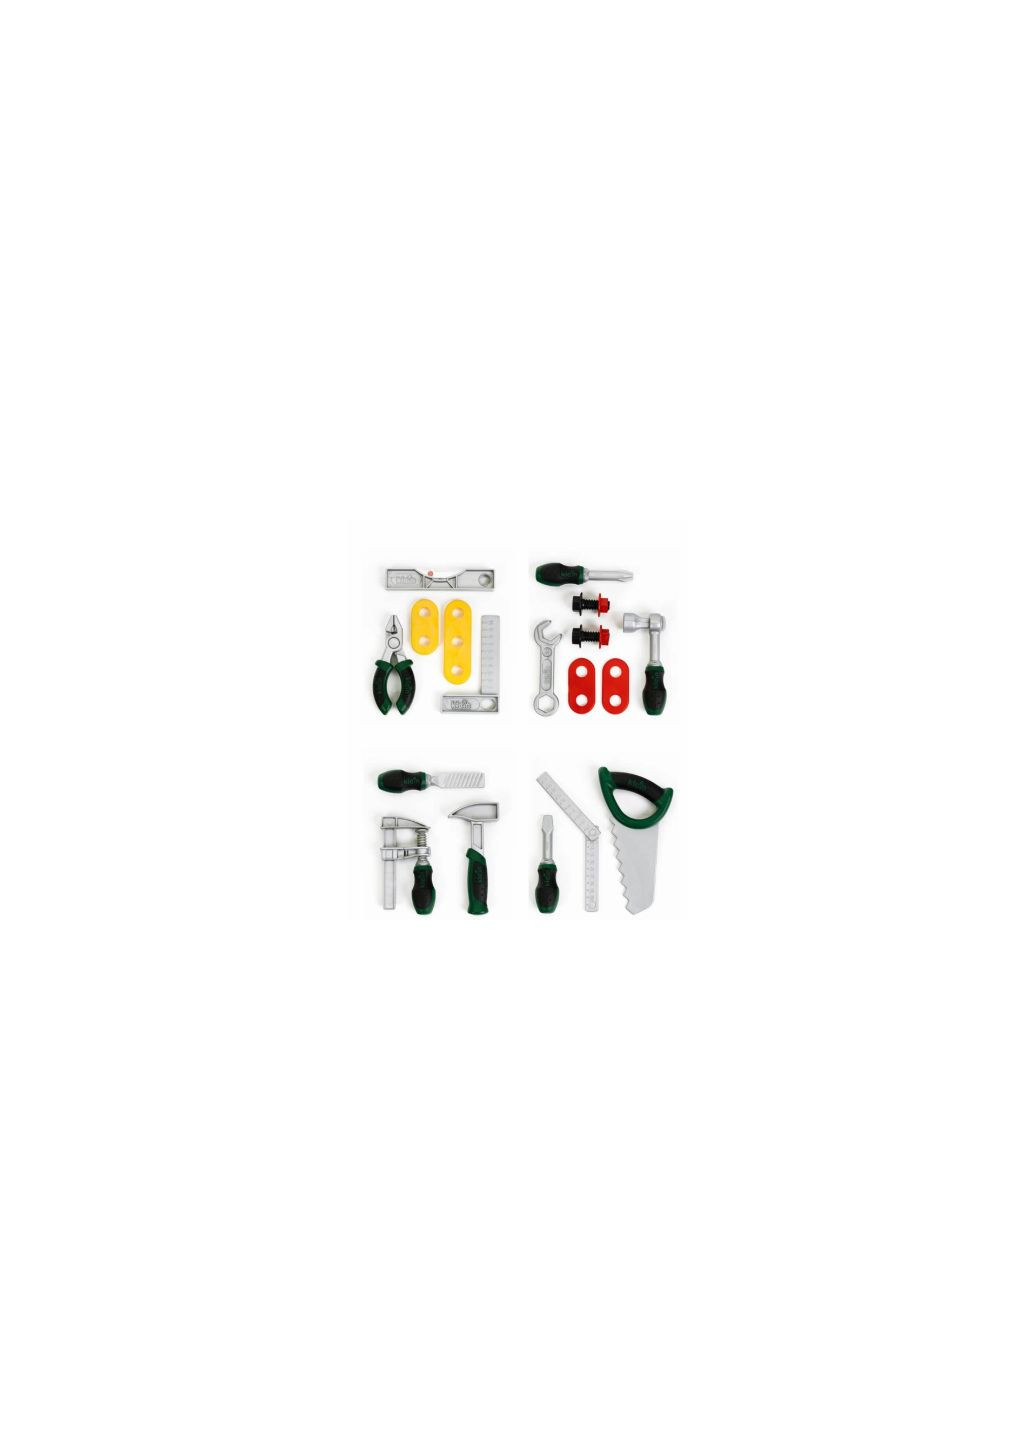 Игровой набор Набор инструментов (8007B) Bosch набір інструментів (275101087)